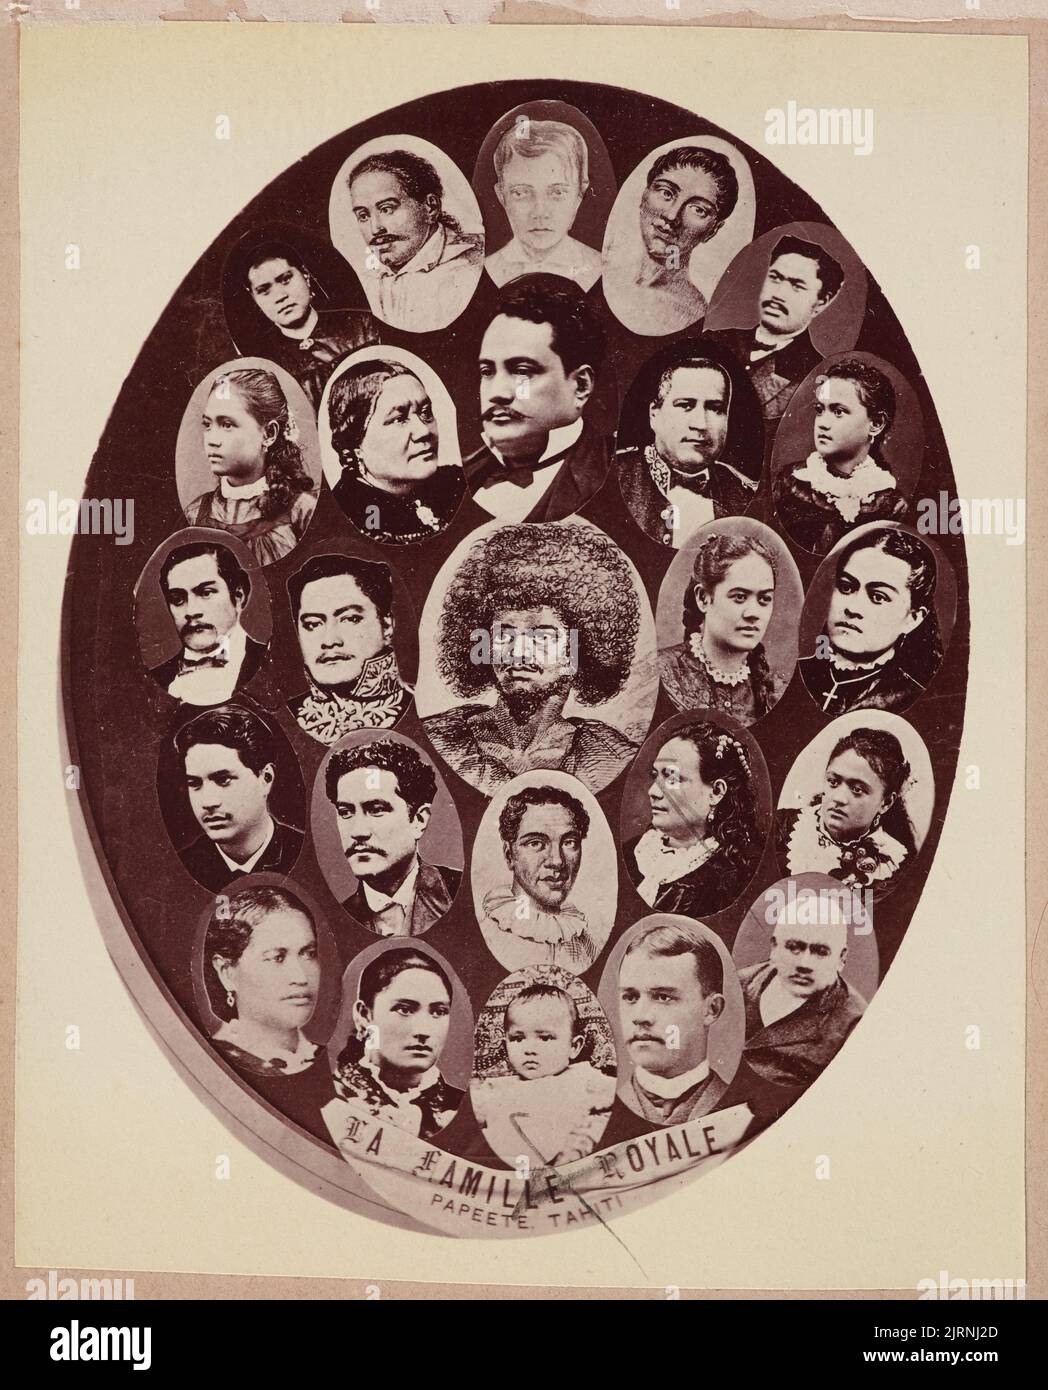 La Famille Royale, Papeete, Tahiti. Dall'album: Tahiti, Samoa e New Zealand Scenes, 1885-1900, New Zealand, maker unknown. Foto Stock